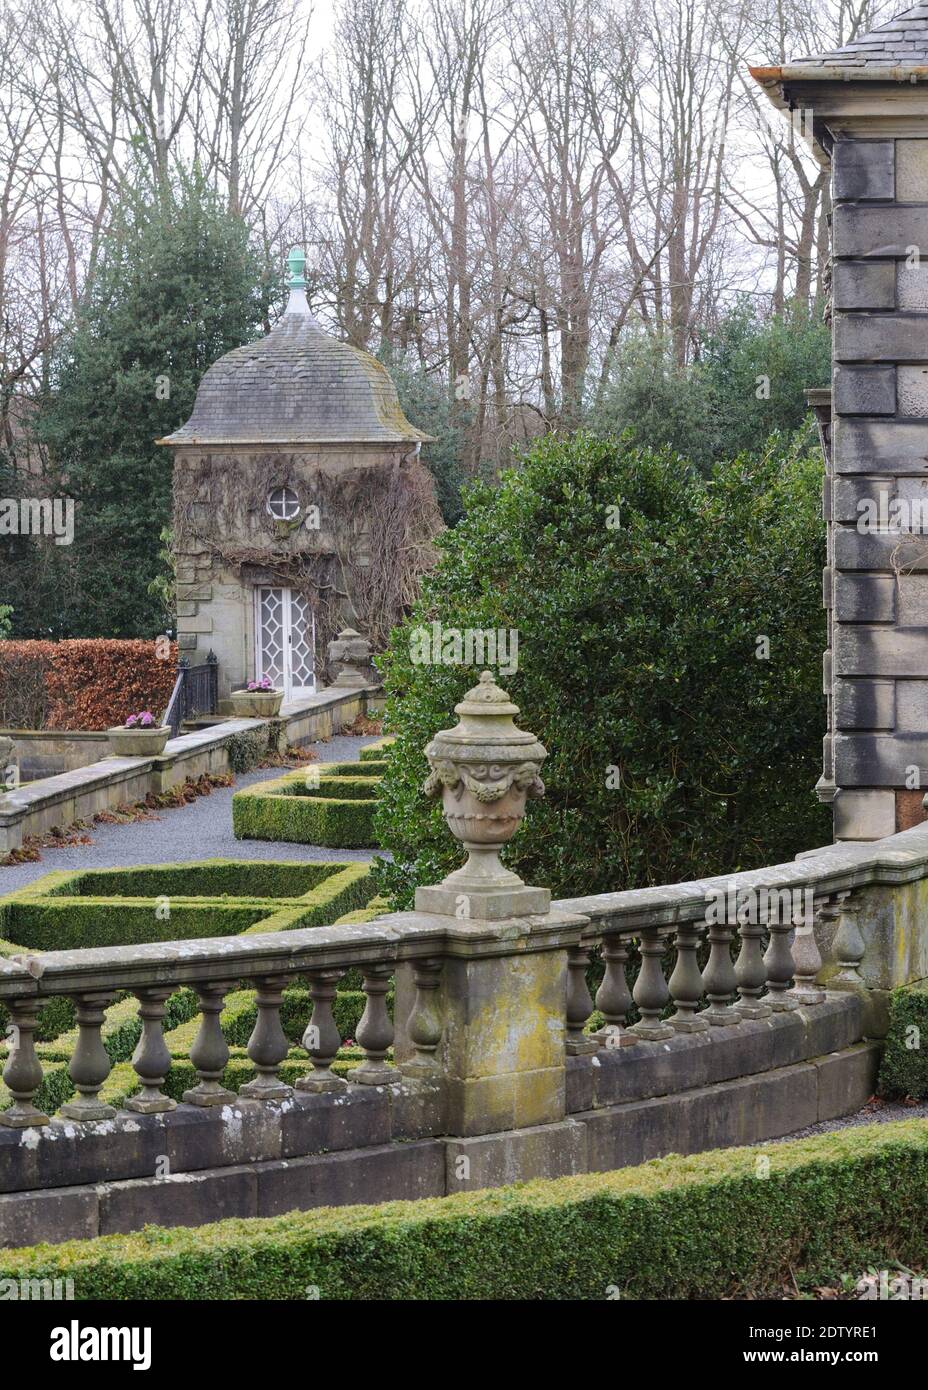 Formal garden and decorative stone work at Pollok House in Glasgow, Scotland, UK, Europe Stock Photo